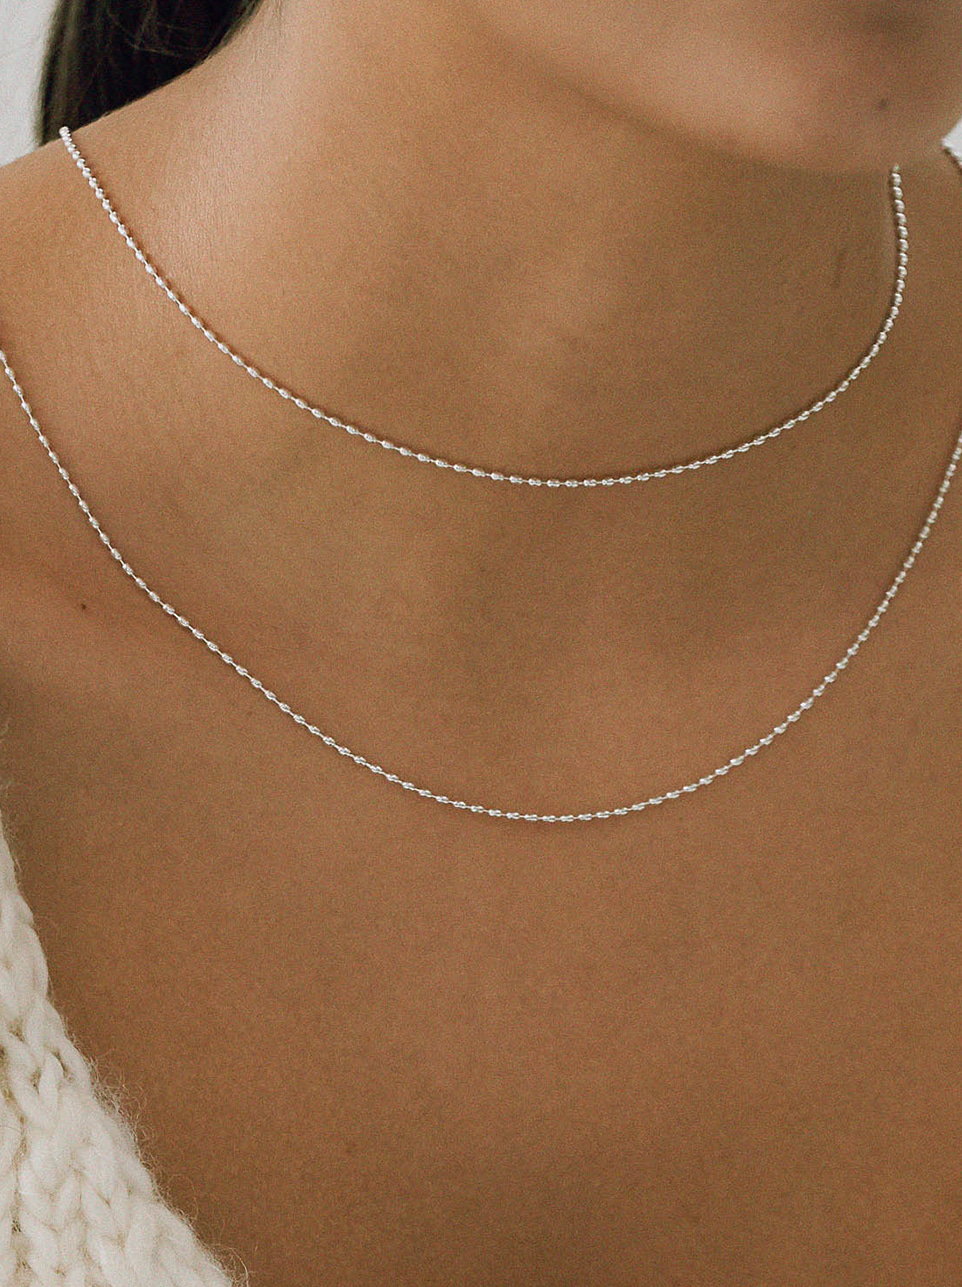 Egg ball chain necklace (Short/Long)